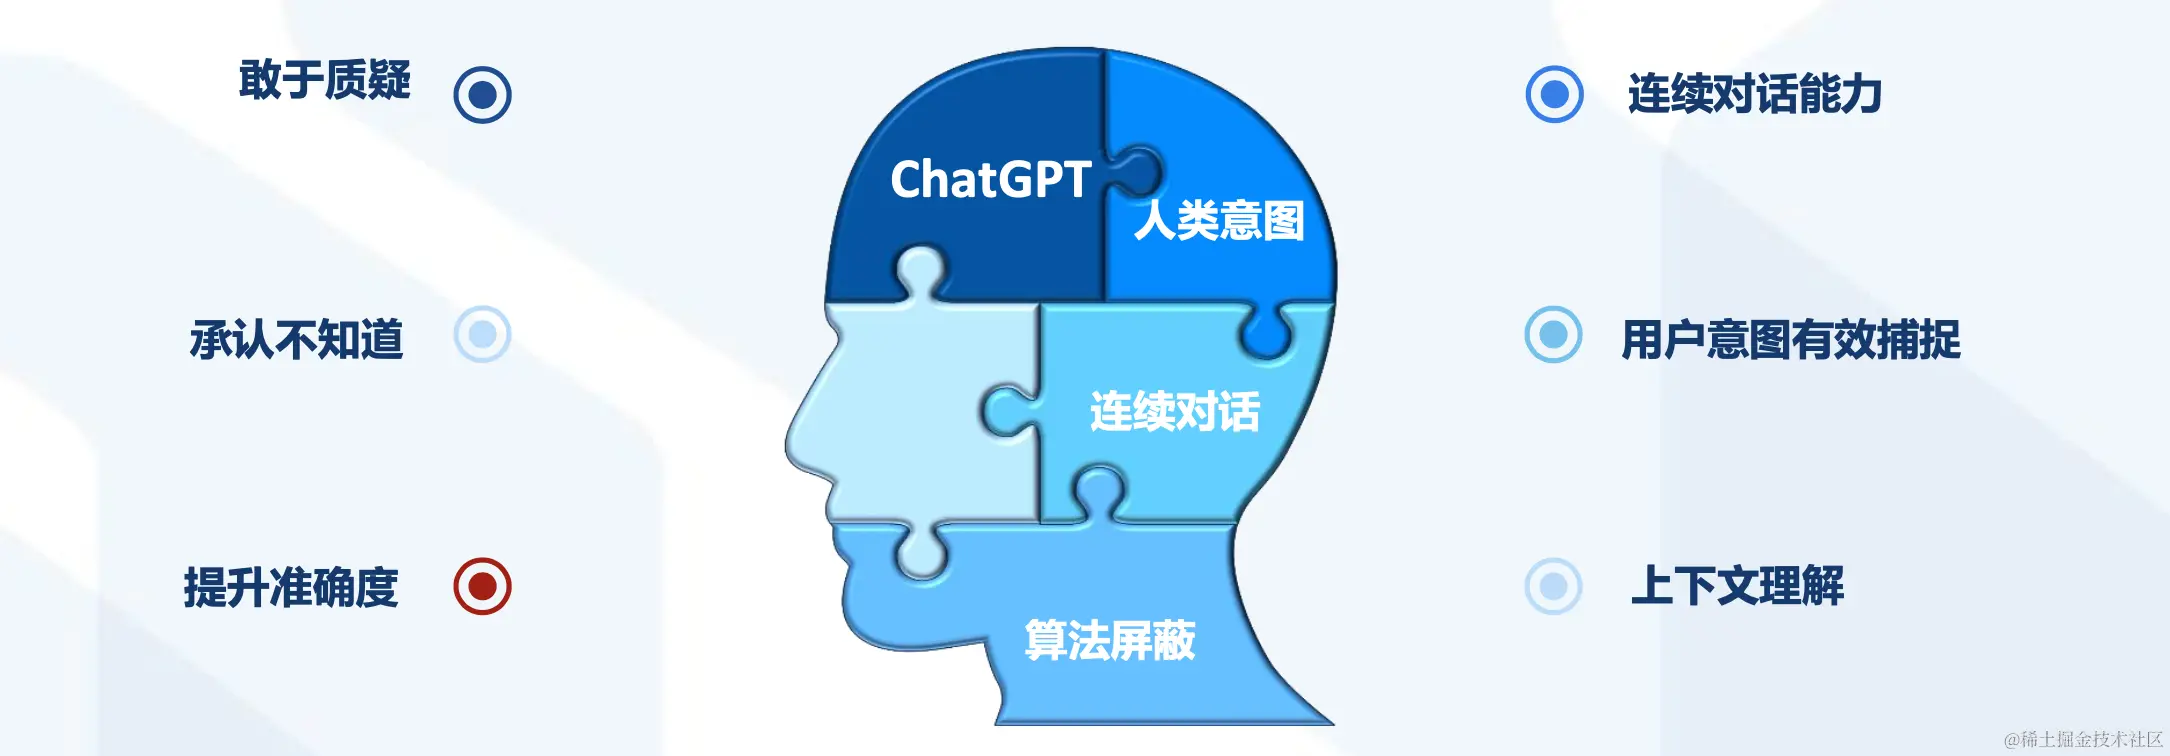 ChatGPT提升的核心点